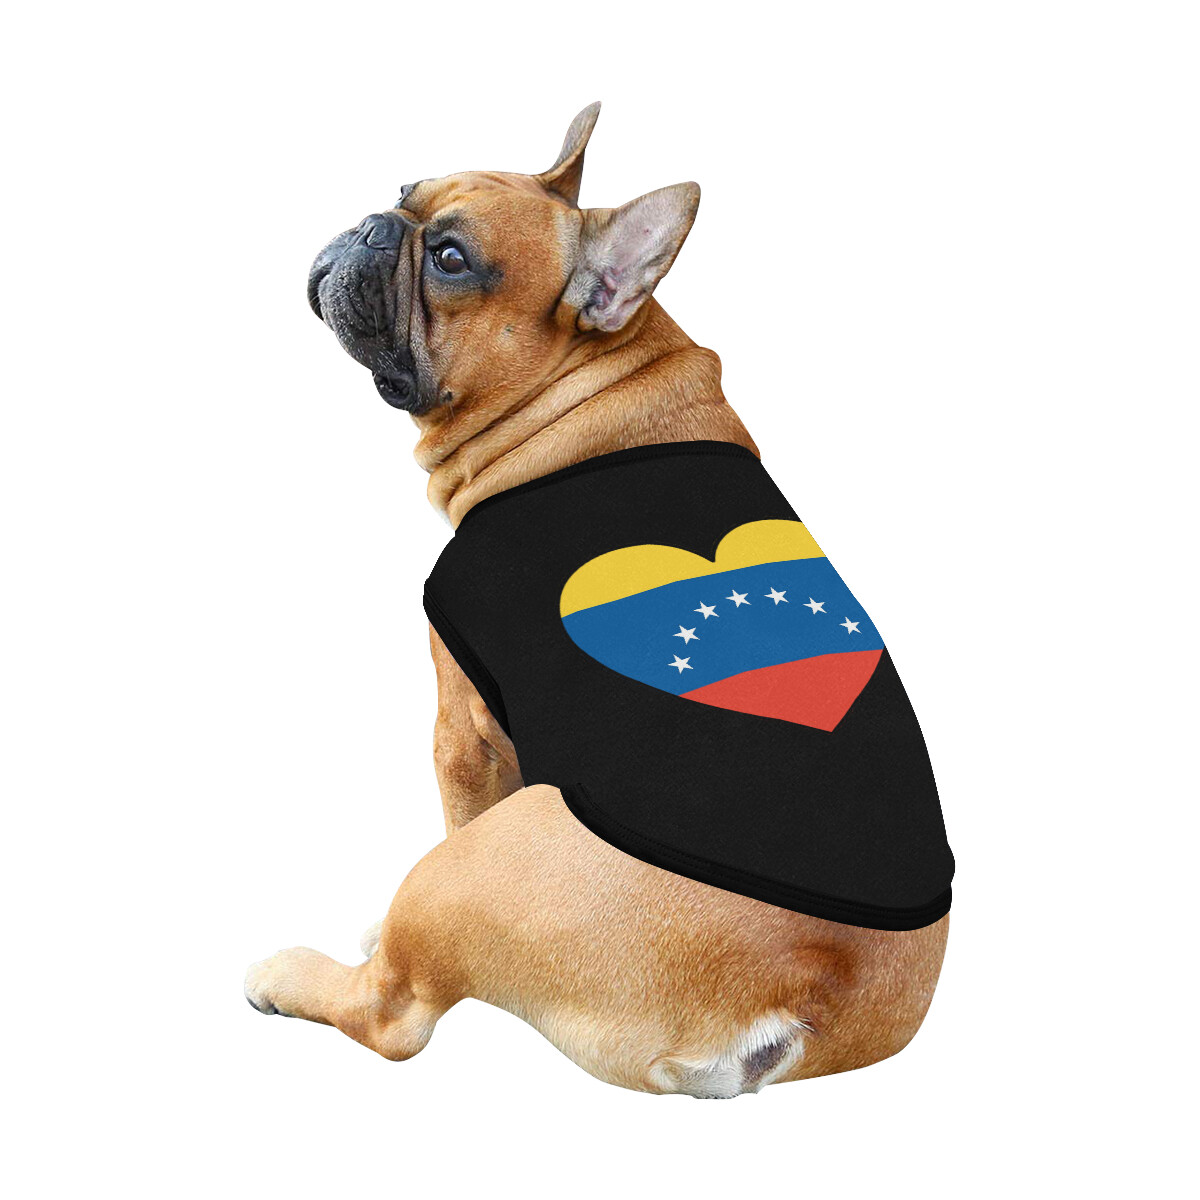 🐕🇻🇪 I love Venezuela dog t-shirt, dog gift, dog tank top, dog shirt, dog clothes, gift, 7 sizes XS to 3XL, Venezuelan flag, heart, black